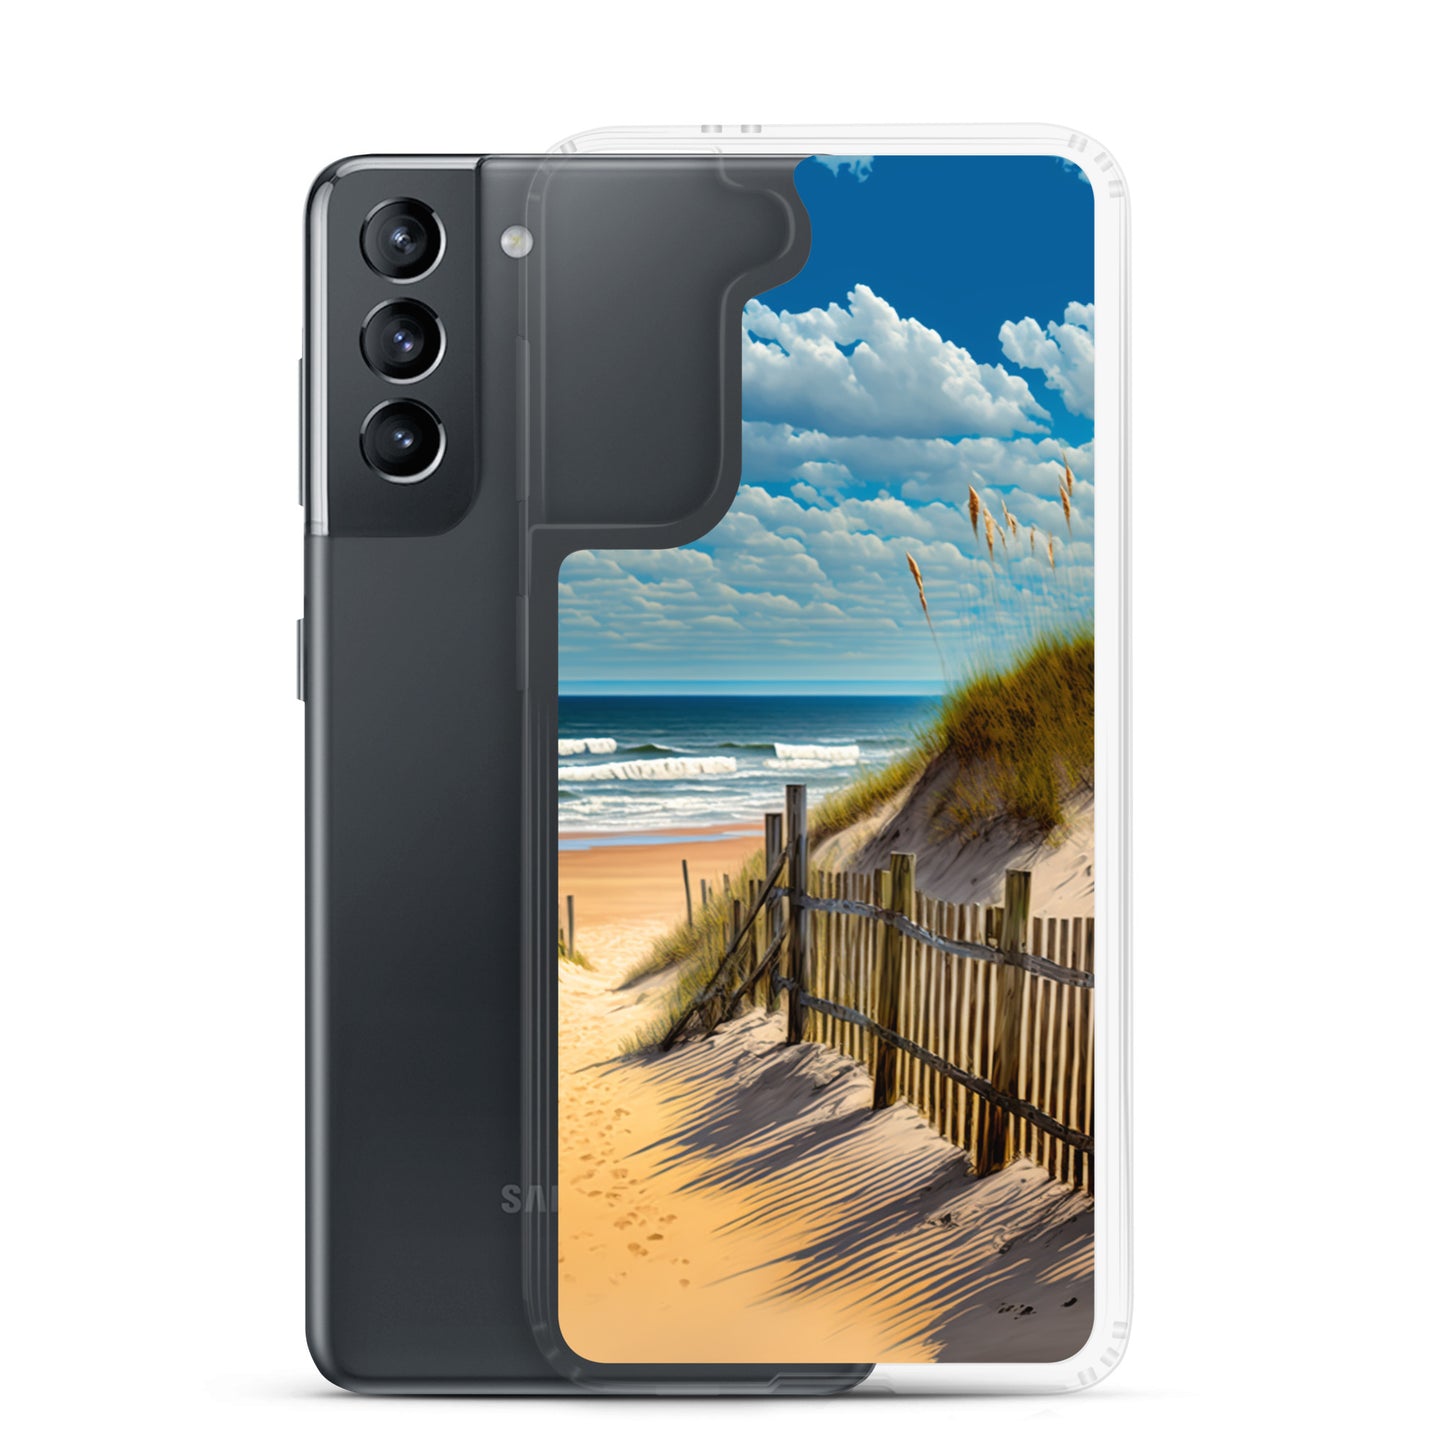 Samsung Case - Beach Life - Beach Dunes